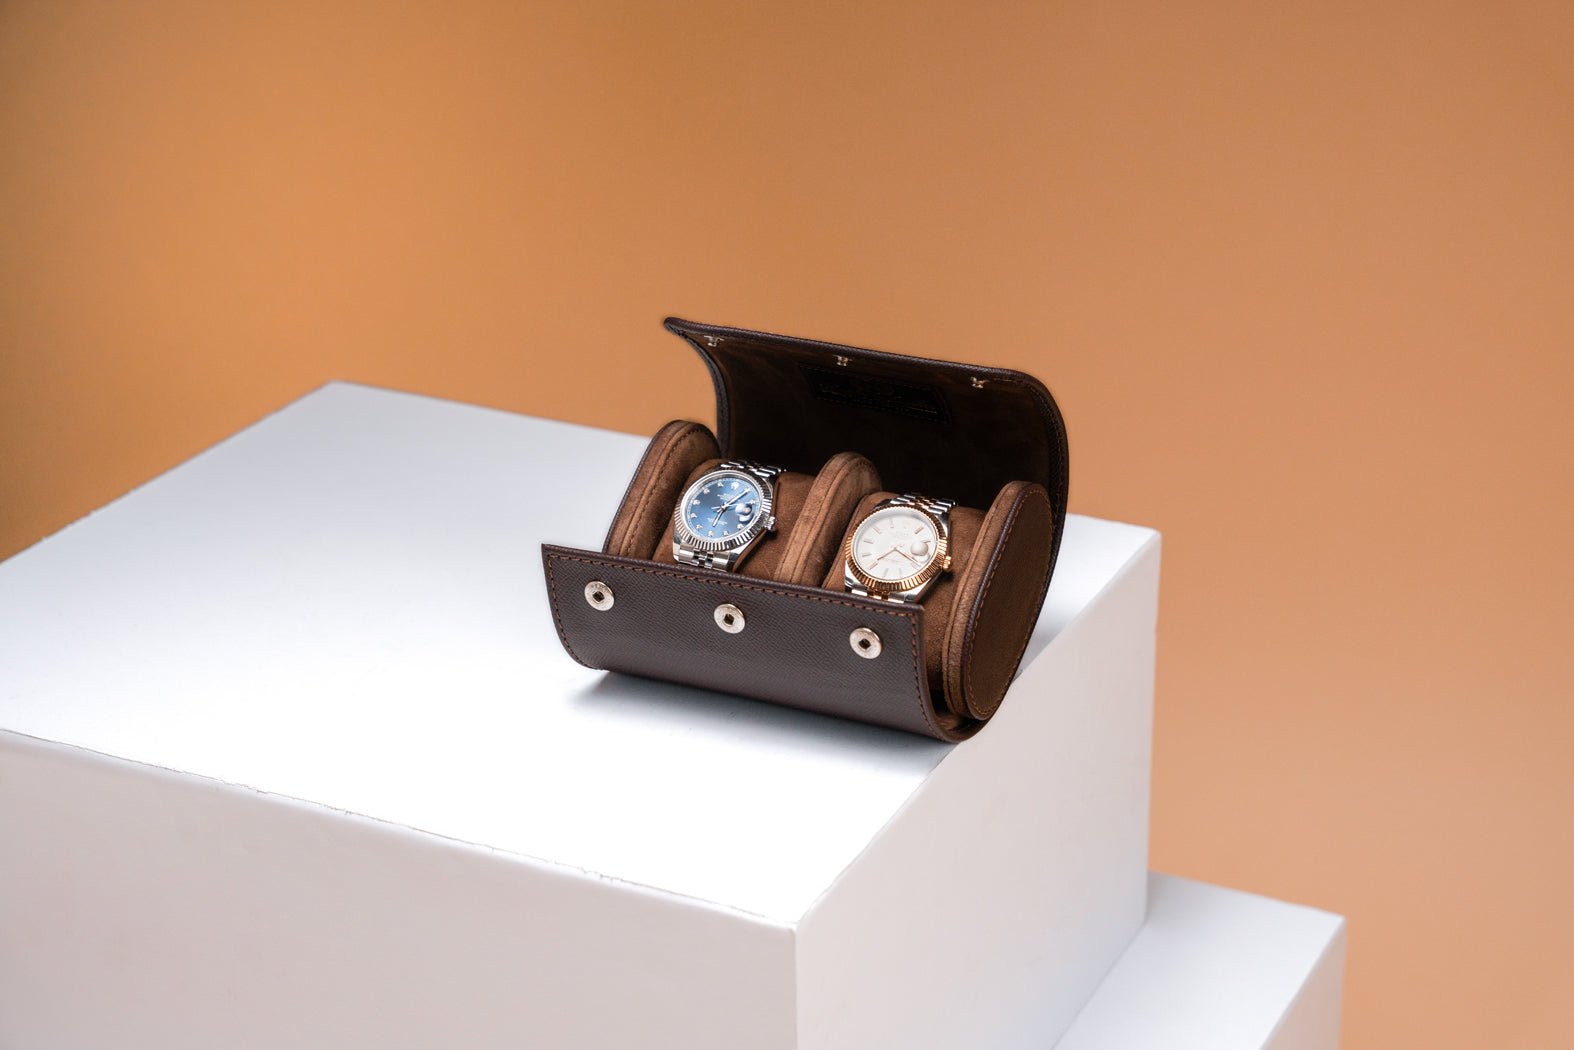 Bosphorus LeatherGalata Saffiano Dark Brown Watch Roll For 2 Watches